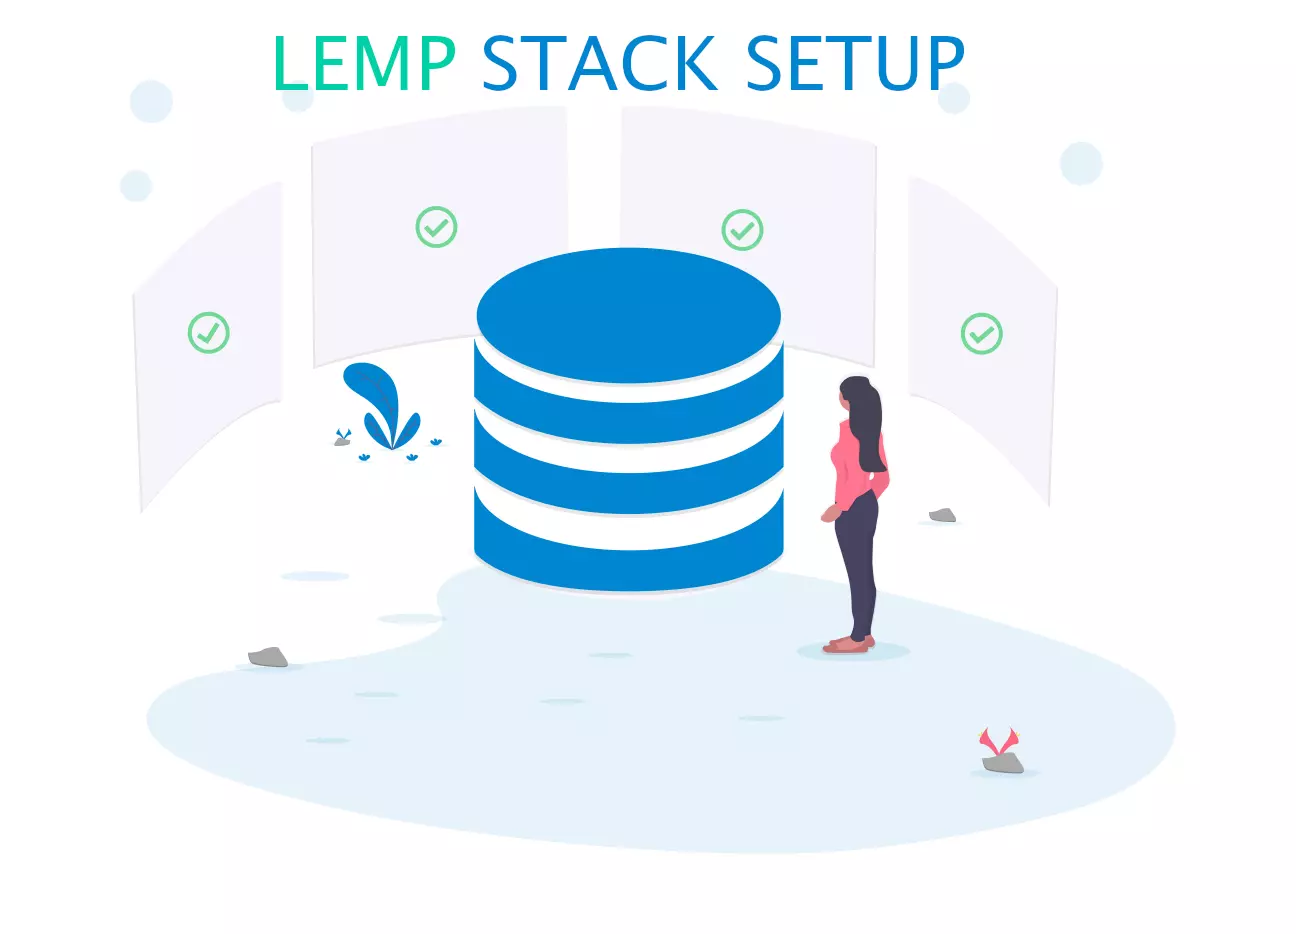 How to setup lemp stack in ubuntu 20.04